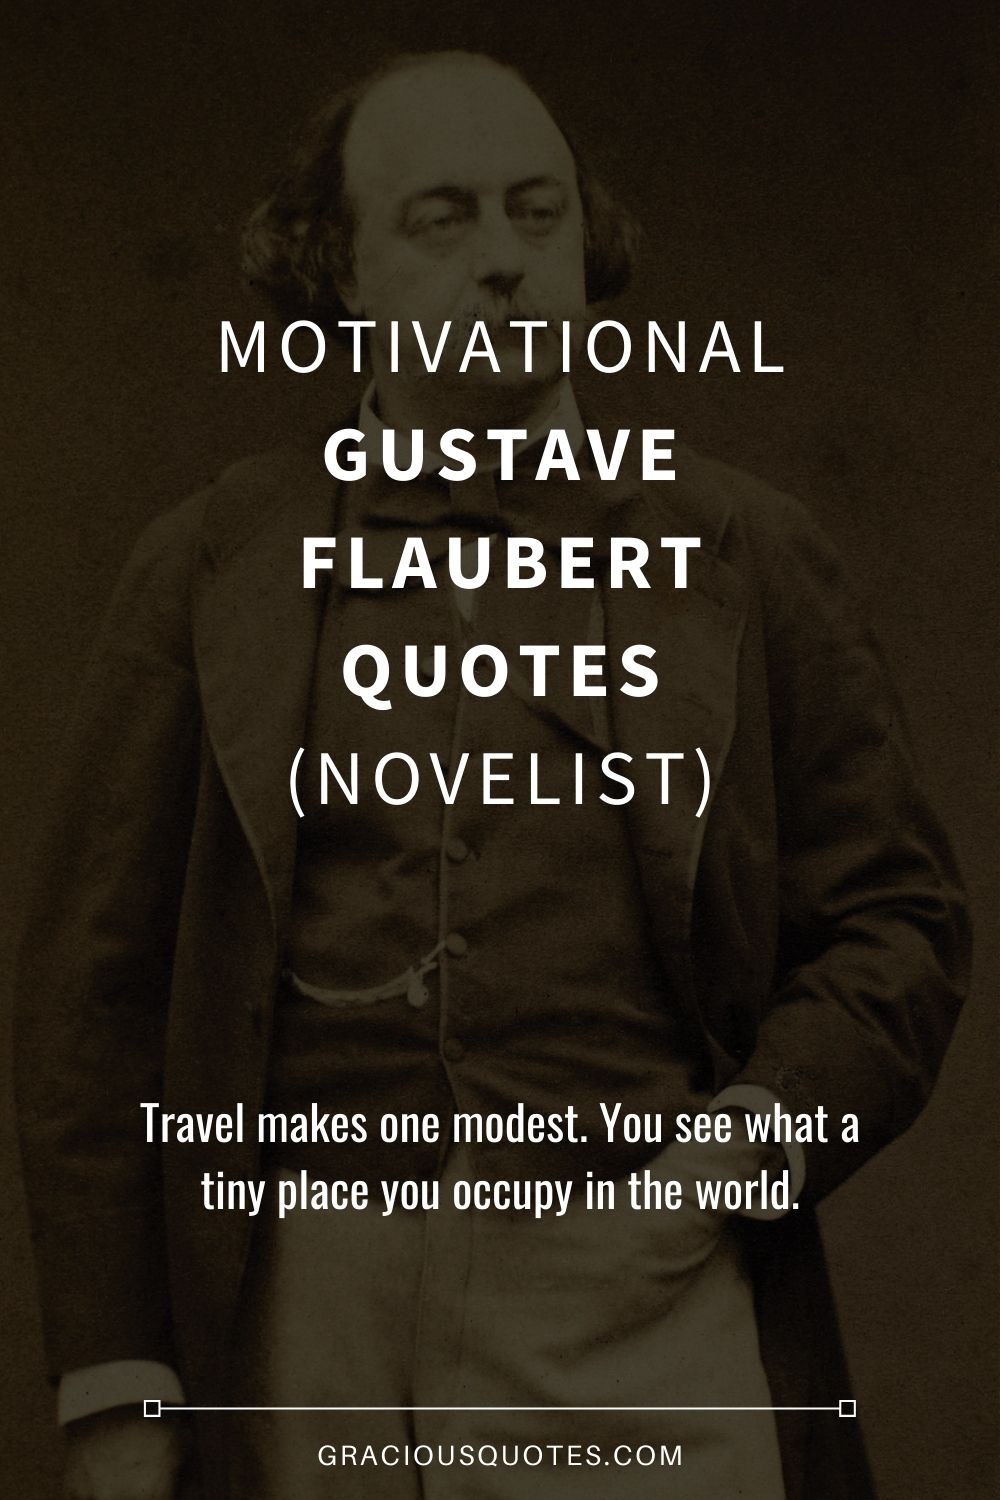 Motivational Gustave Flaubert Quotes (NOVELIST) - Gracious Quotes